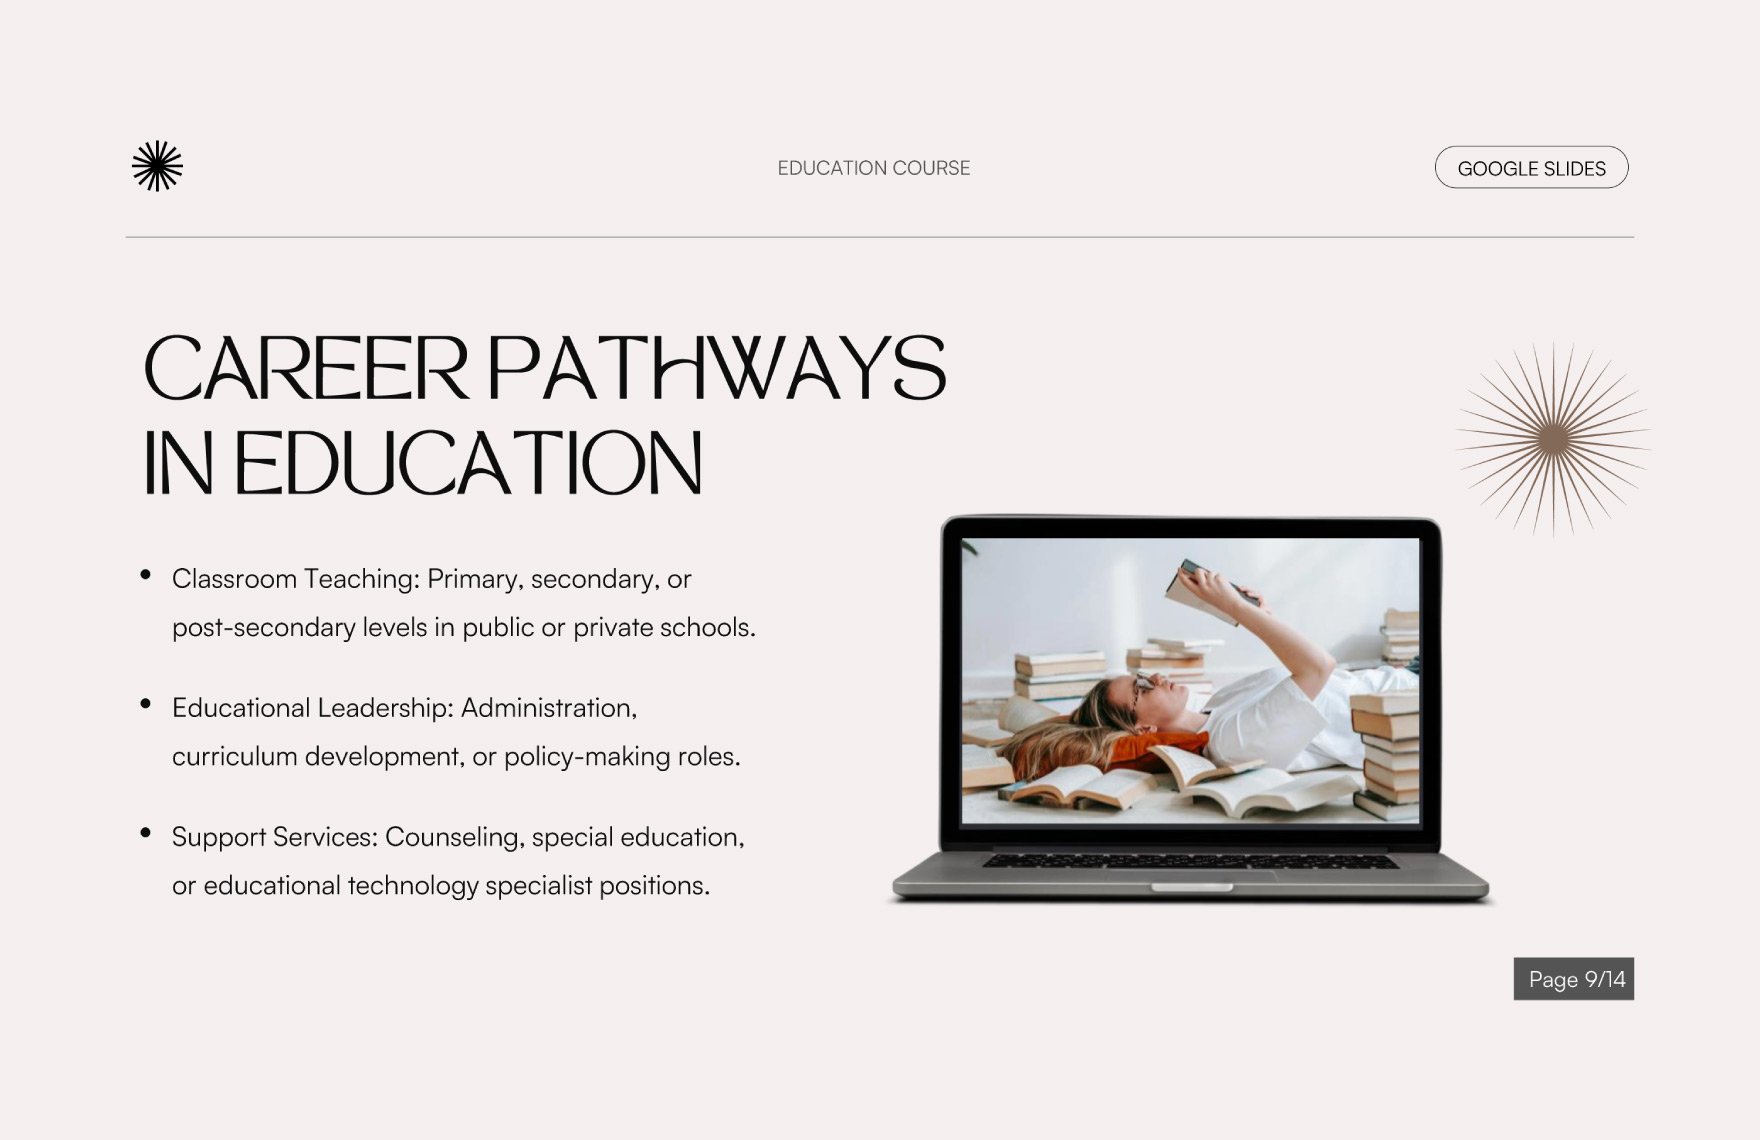 Education Course Google Slides Template